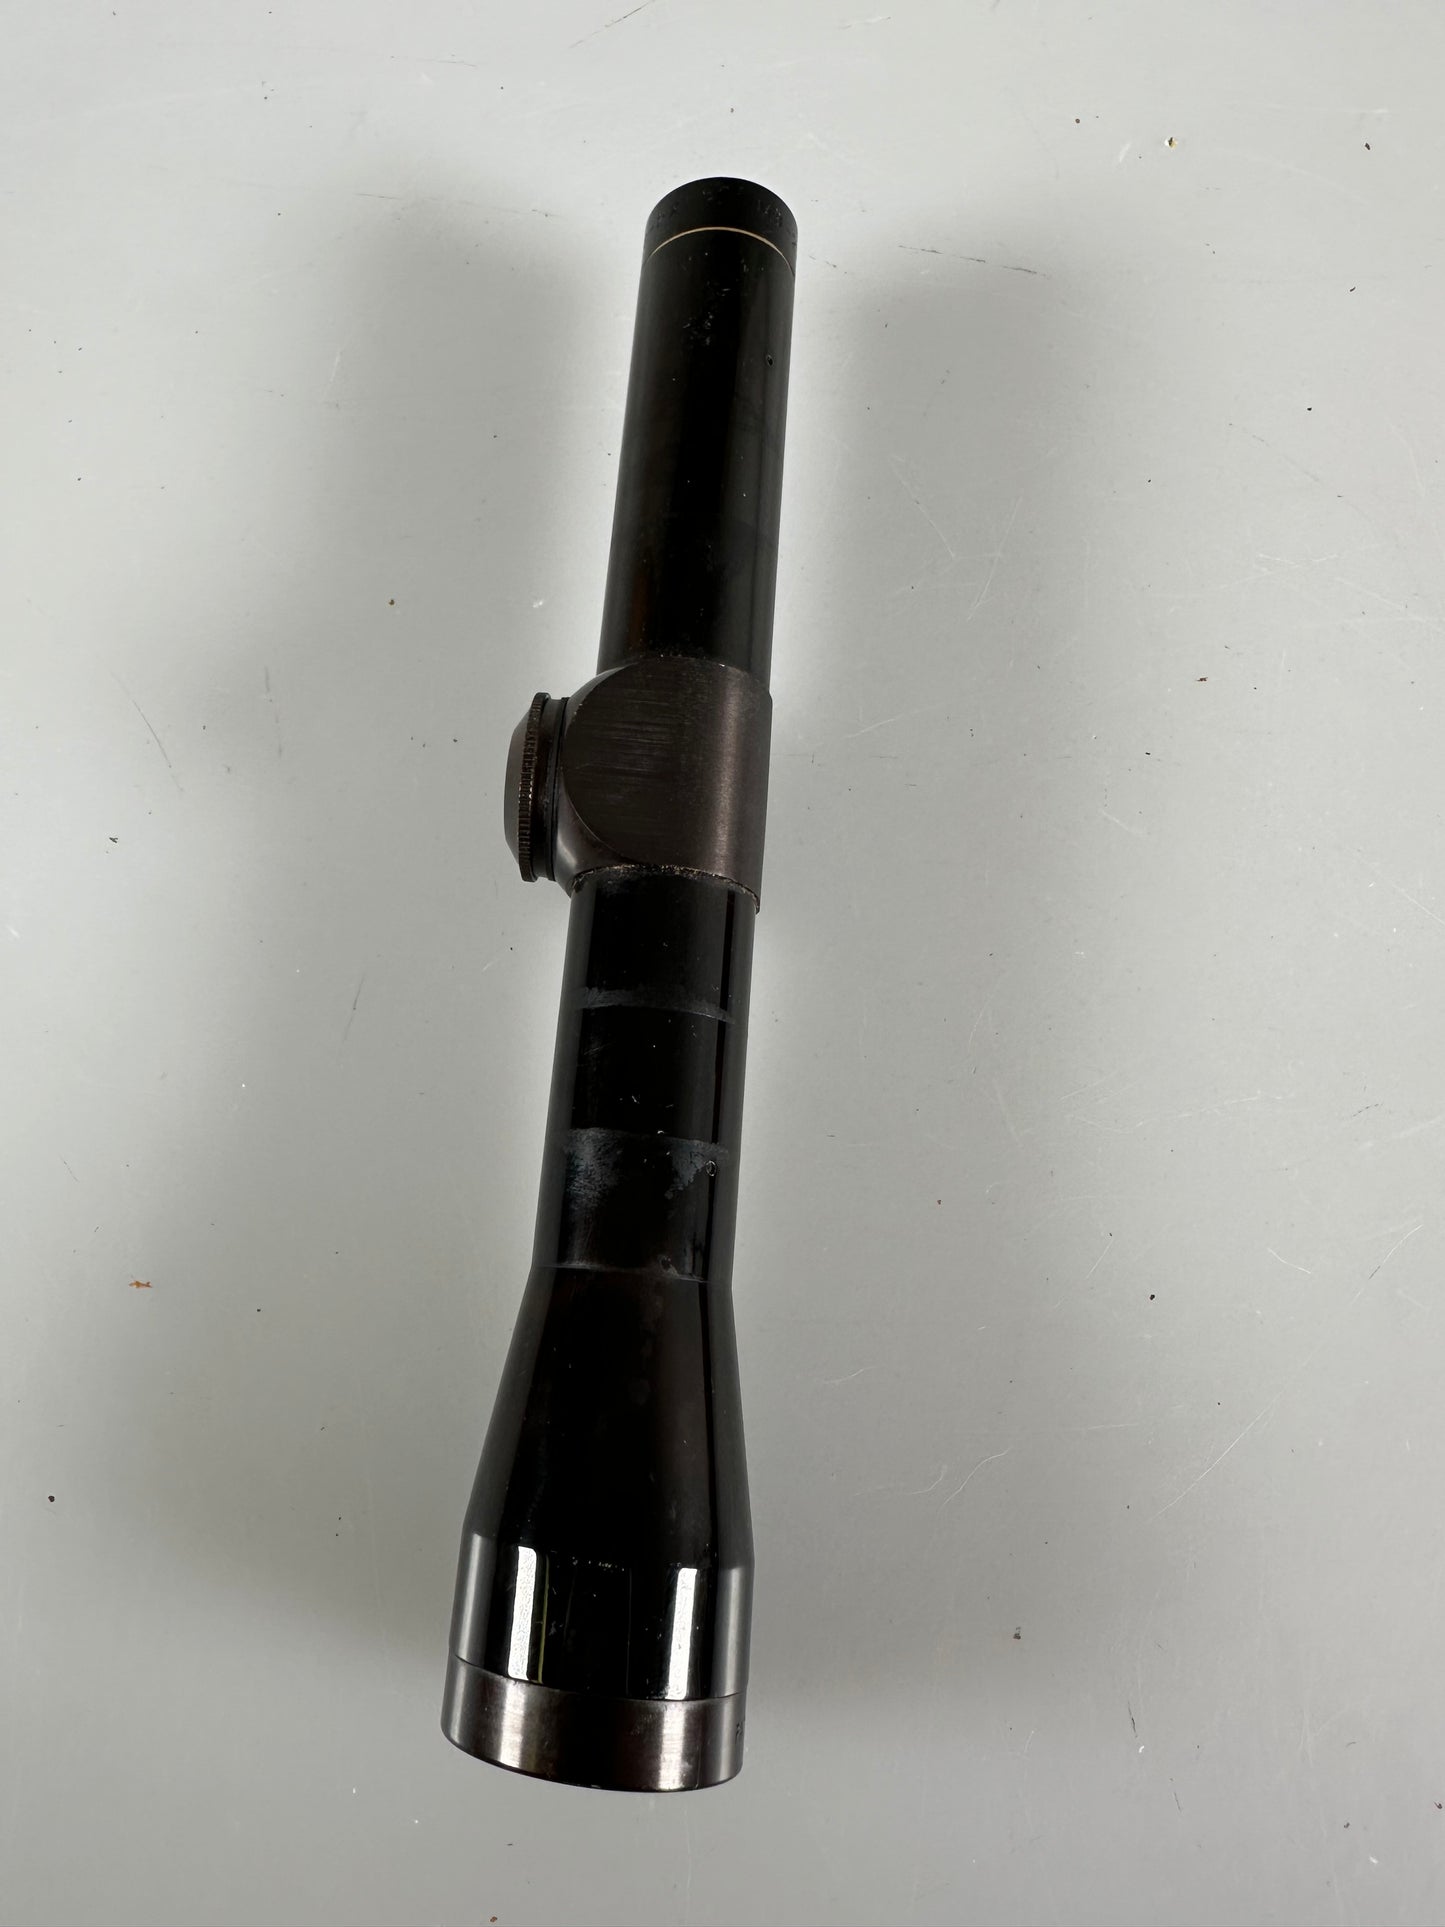 Rare Leupold M8-2x Extended Eye Relief Pistol Scope 1" Duplex